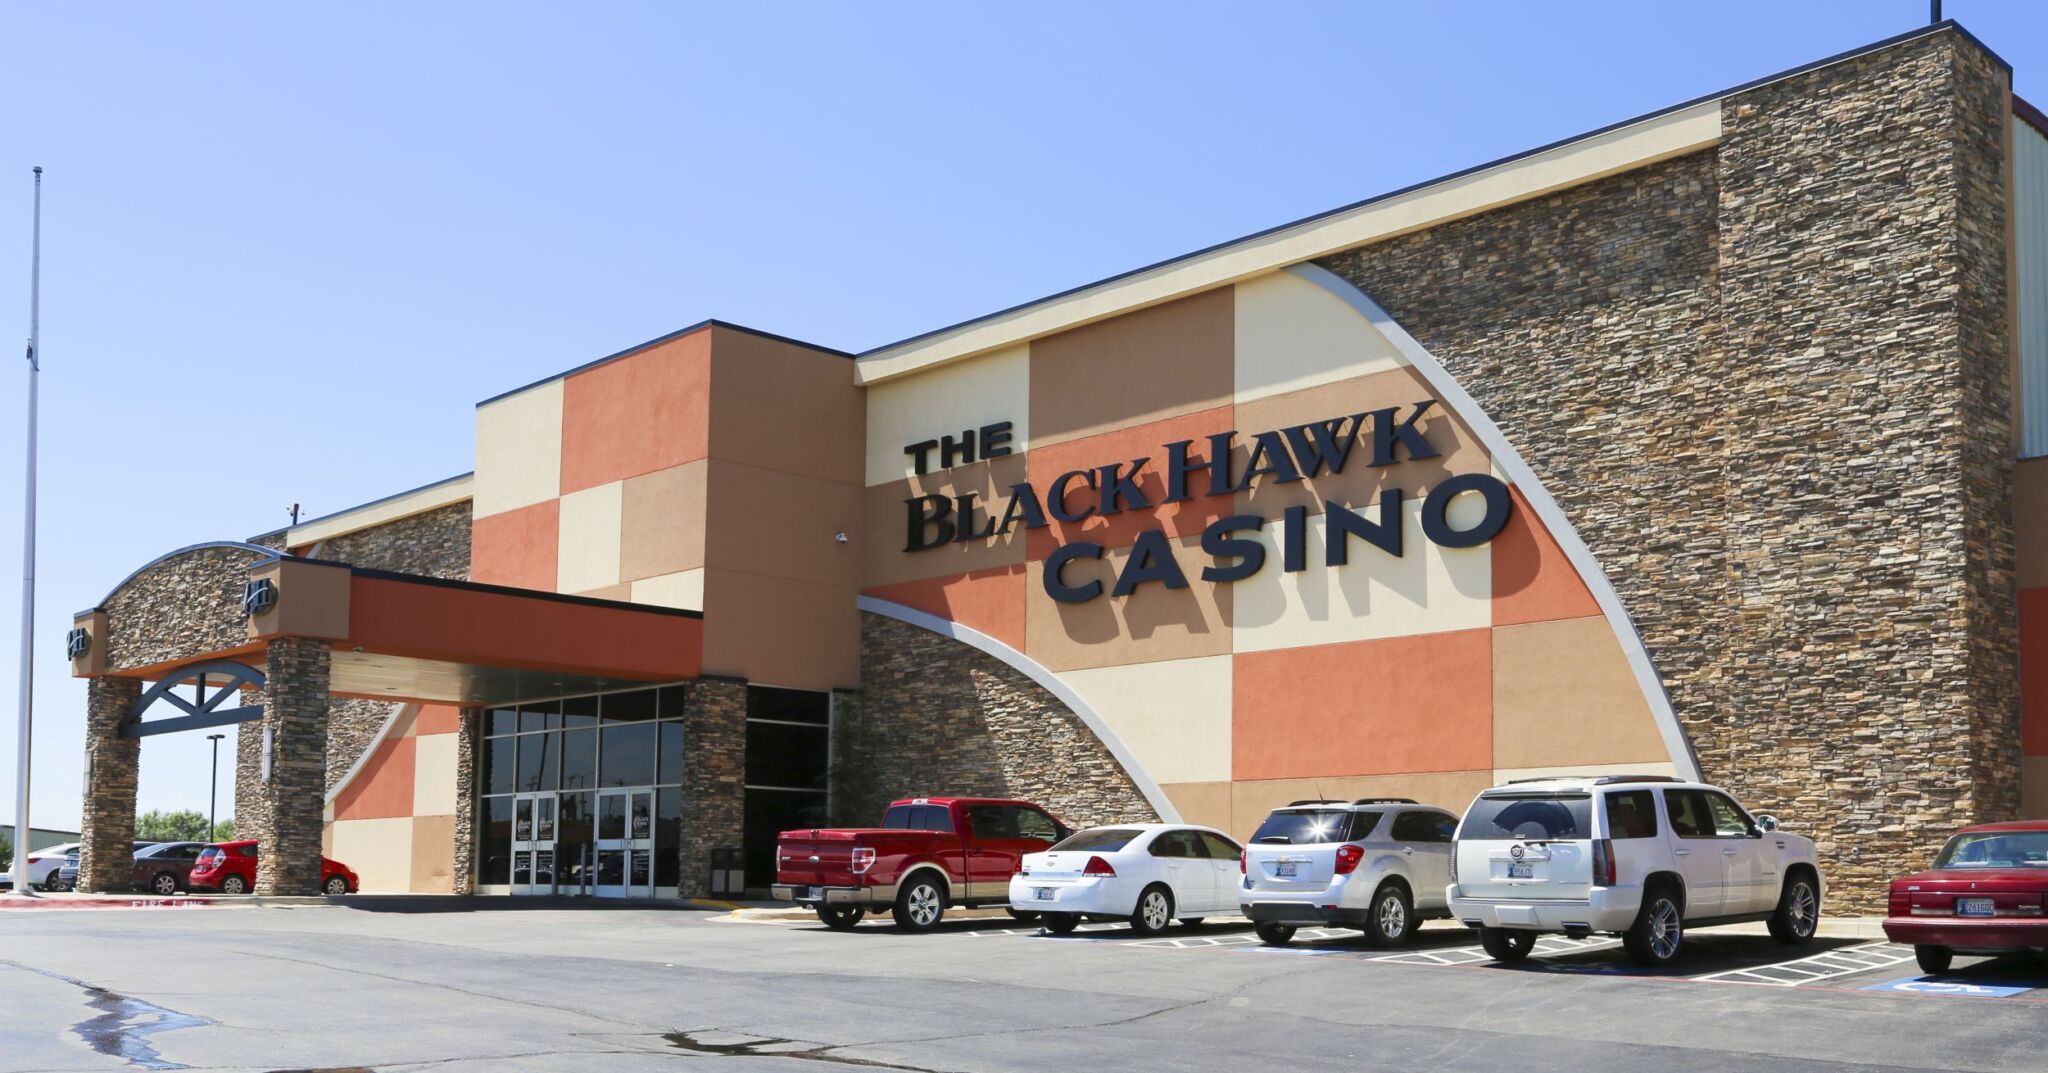 red hawk casino california sacramento poker room